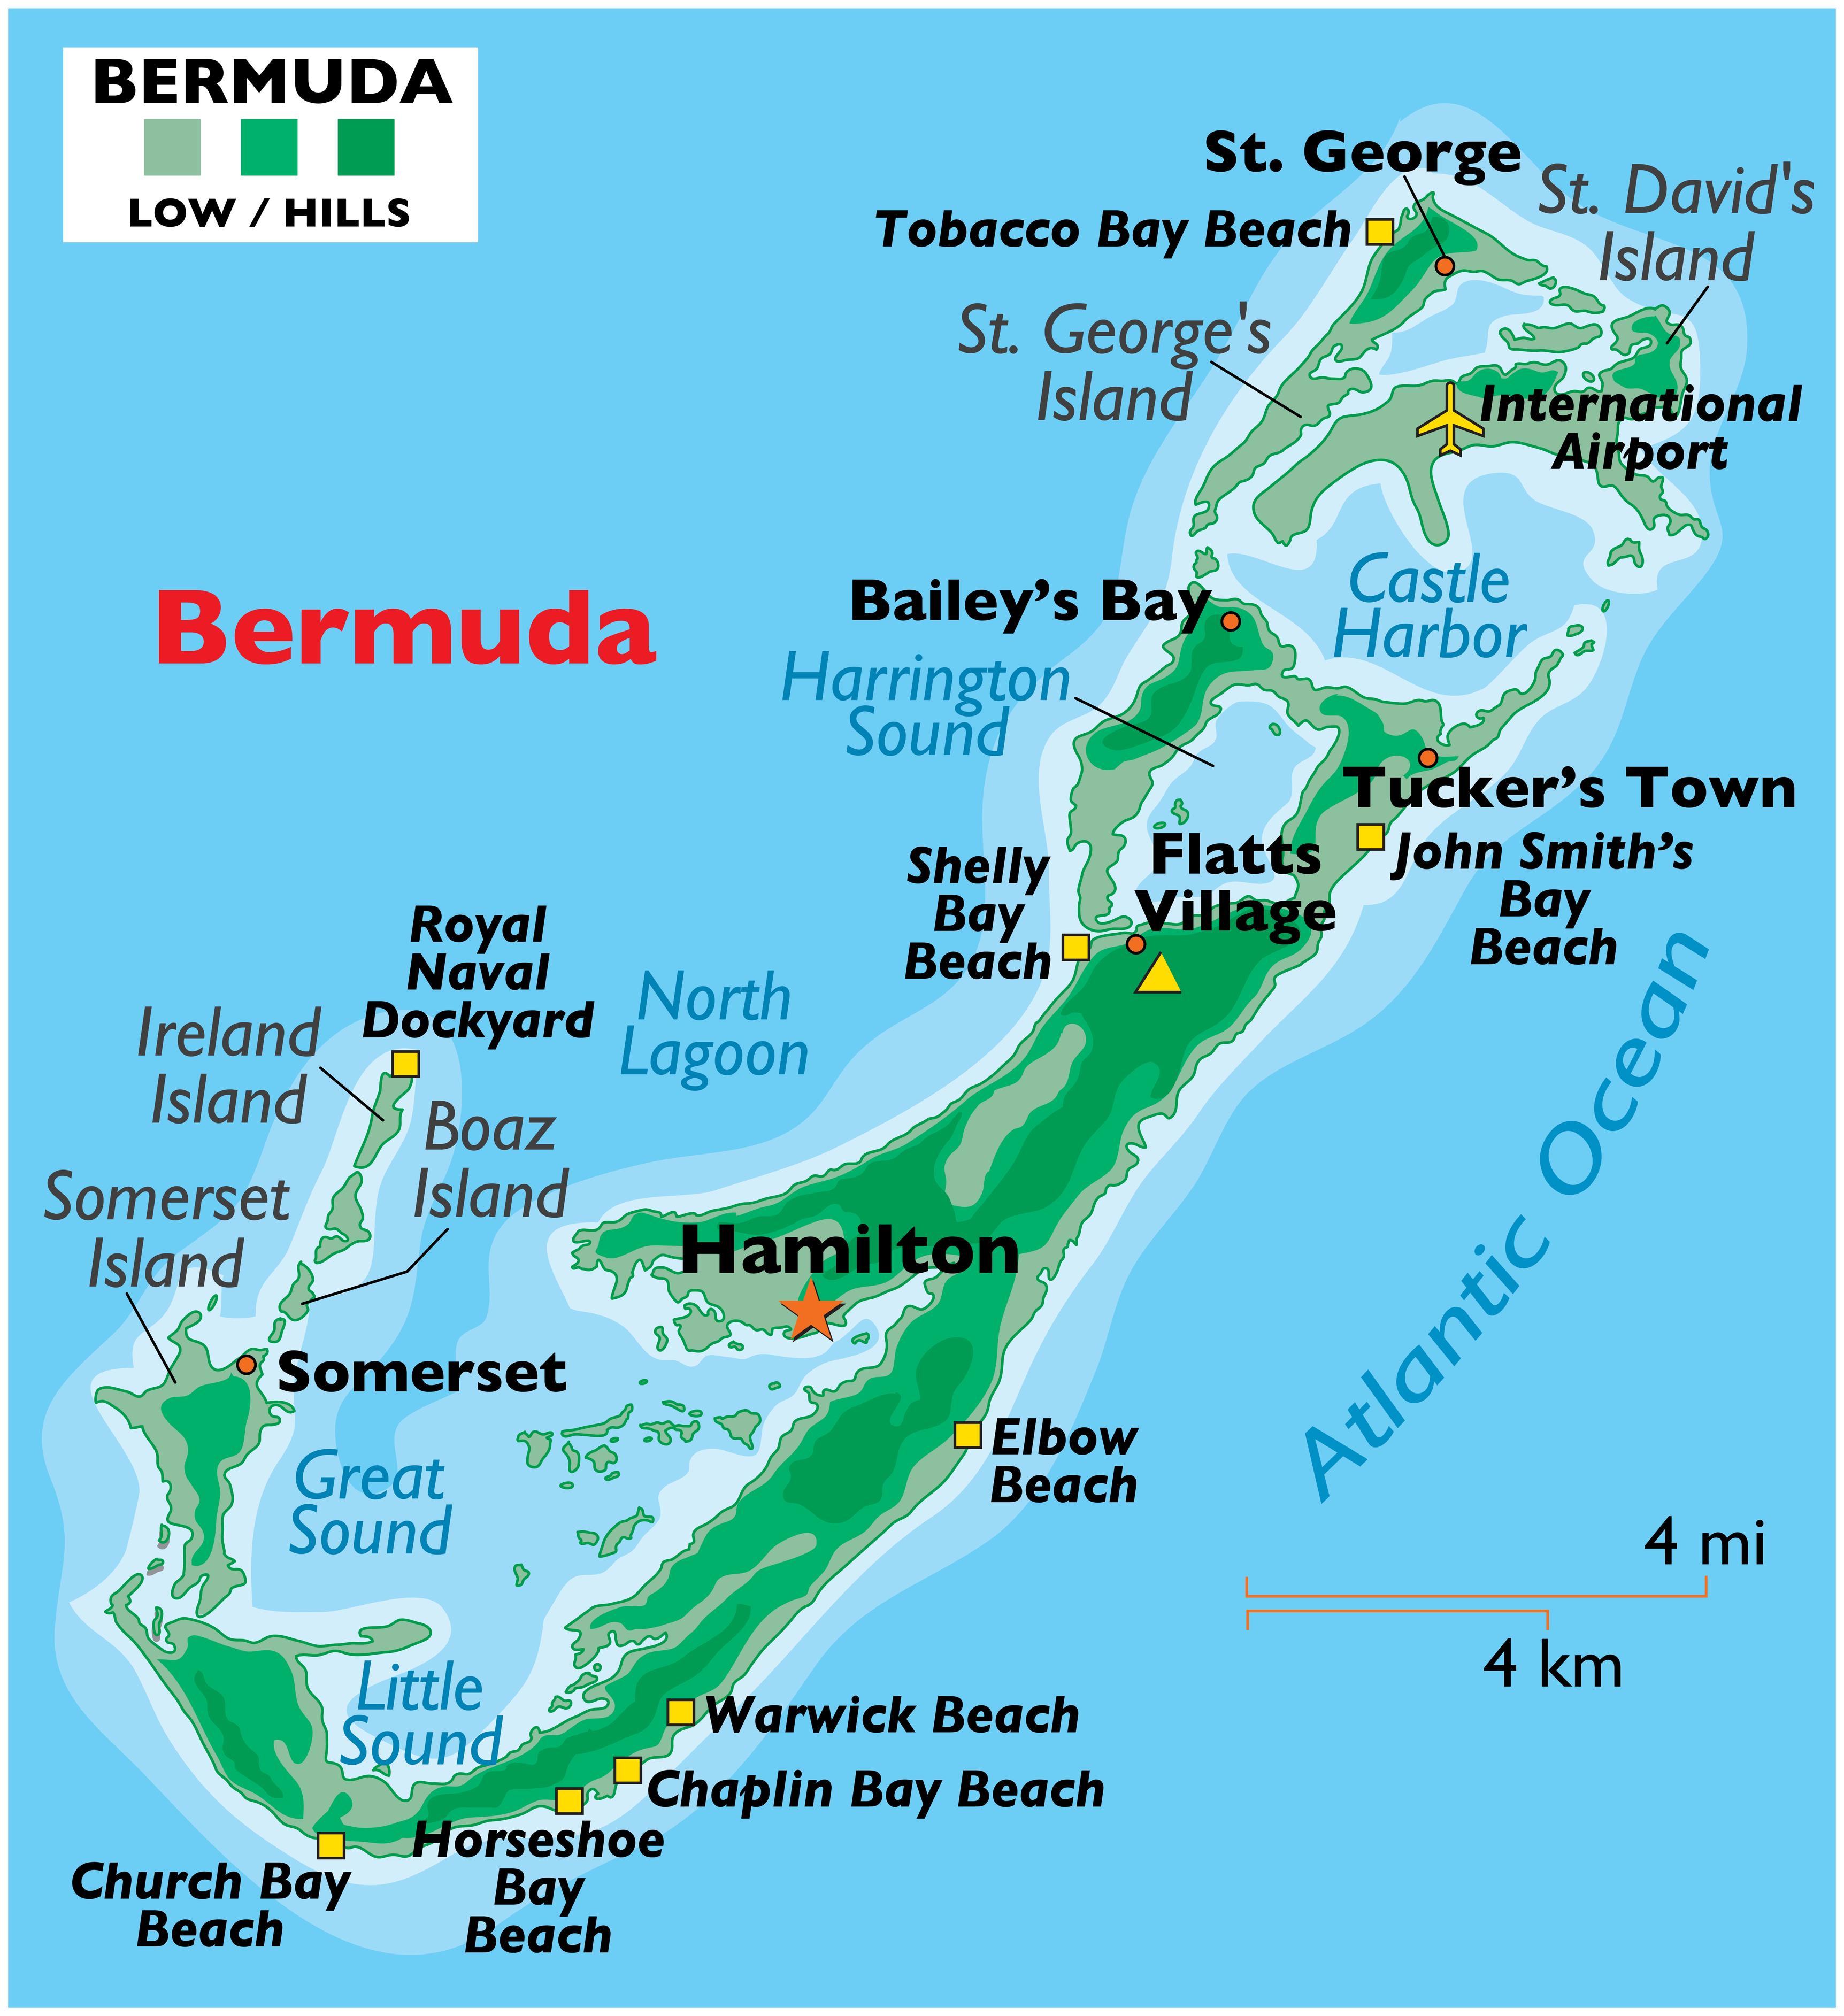 Where is Bermuda located?